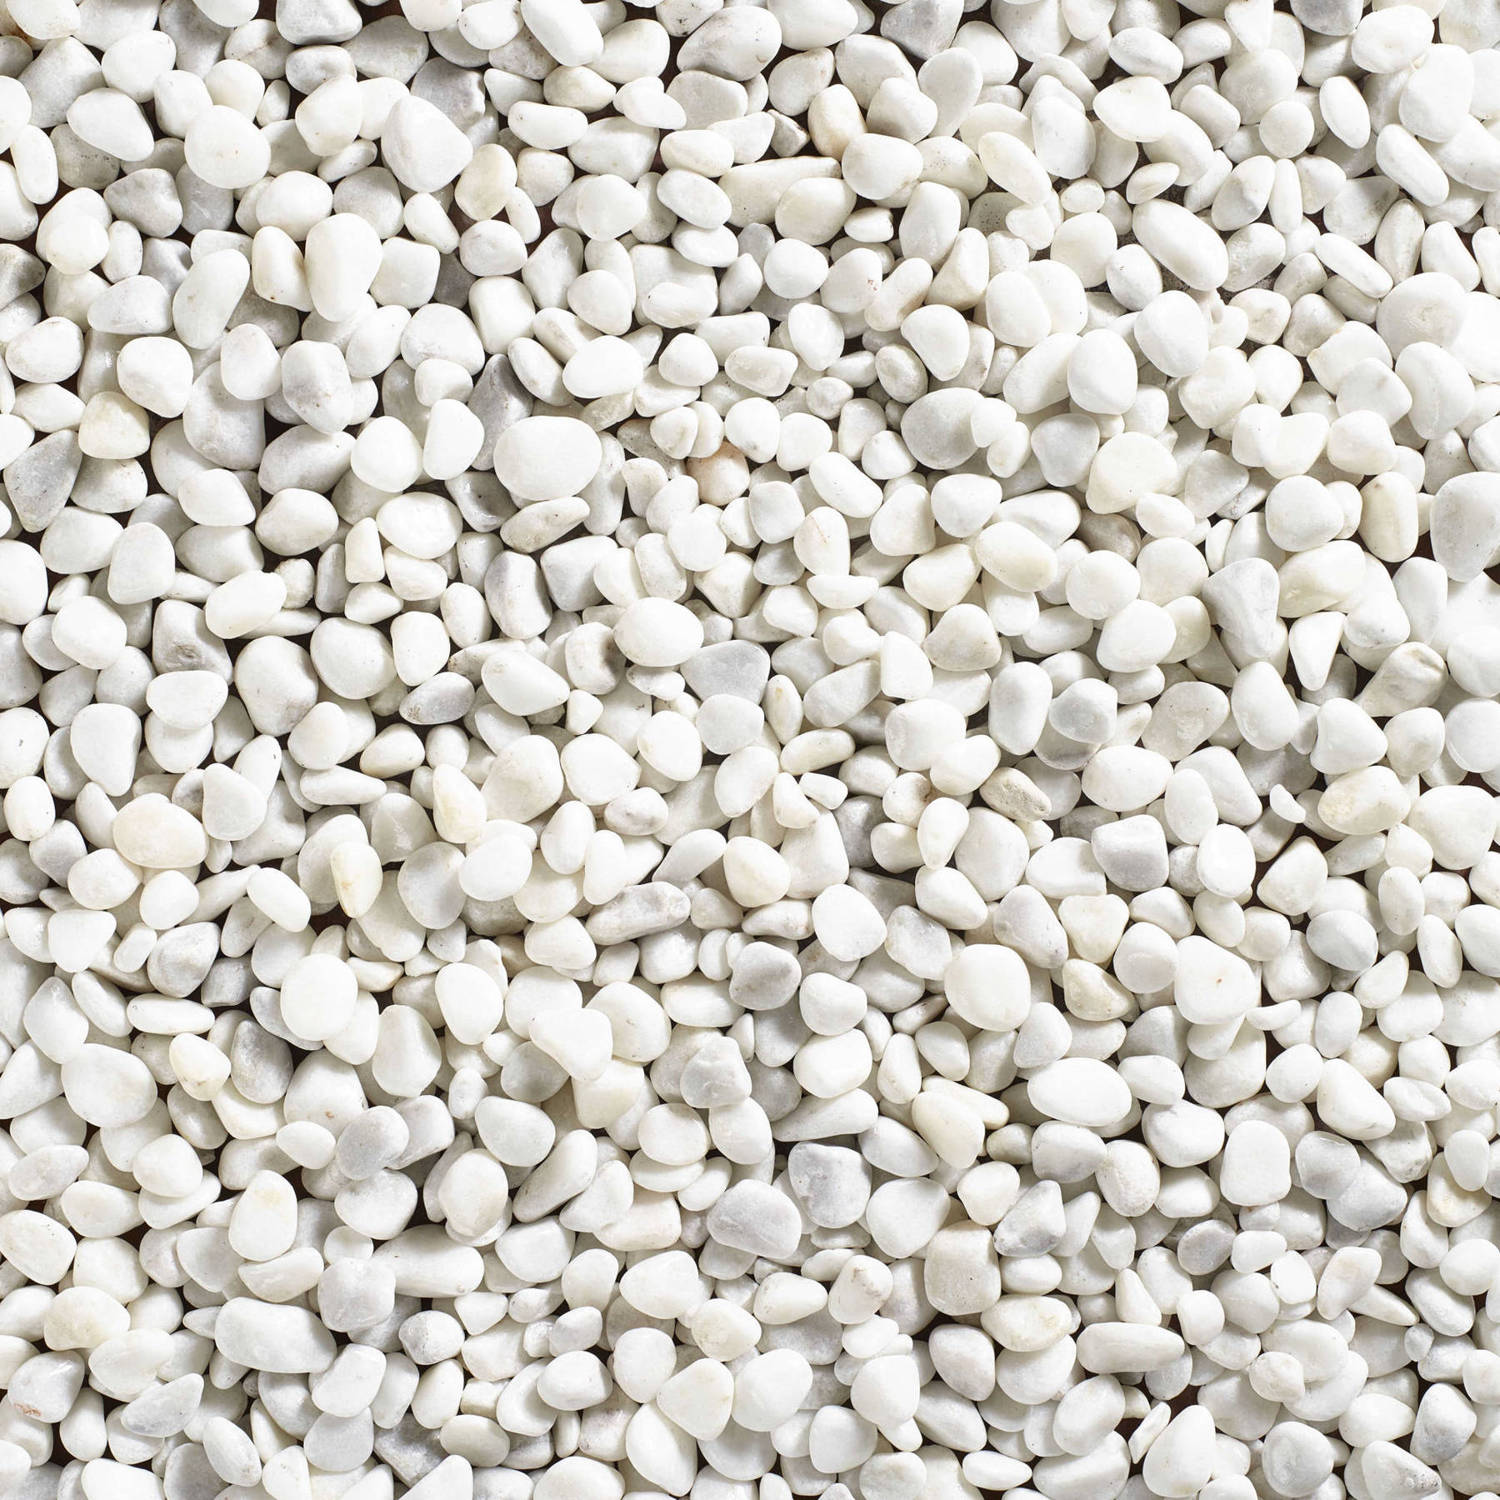 Coral White Decorative Pebbles Stones Wet